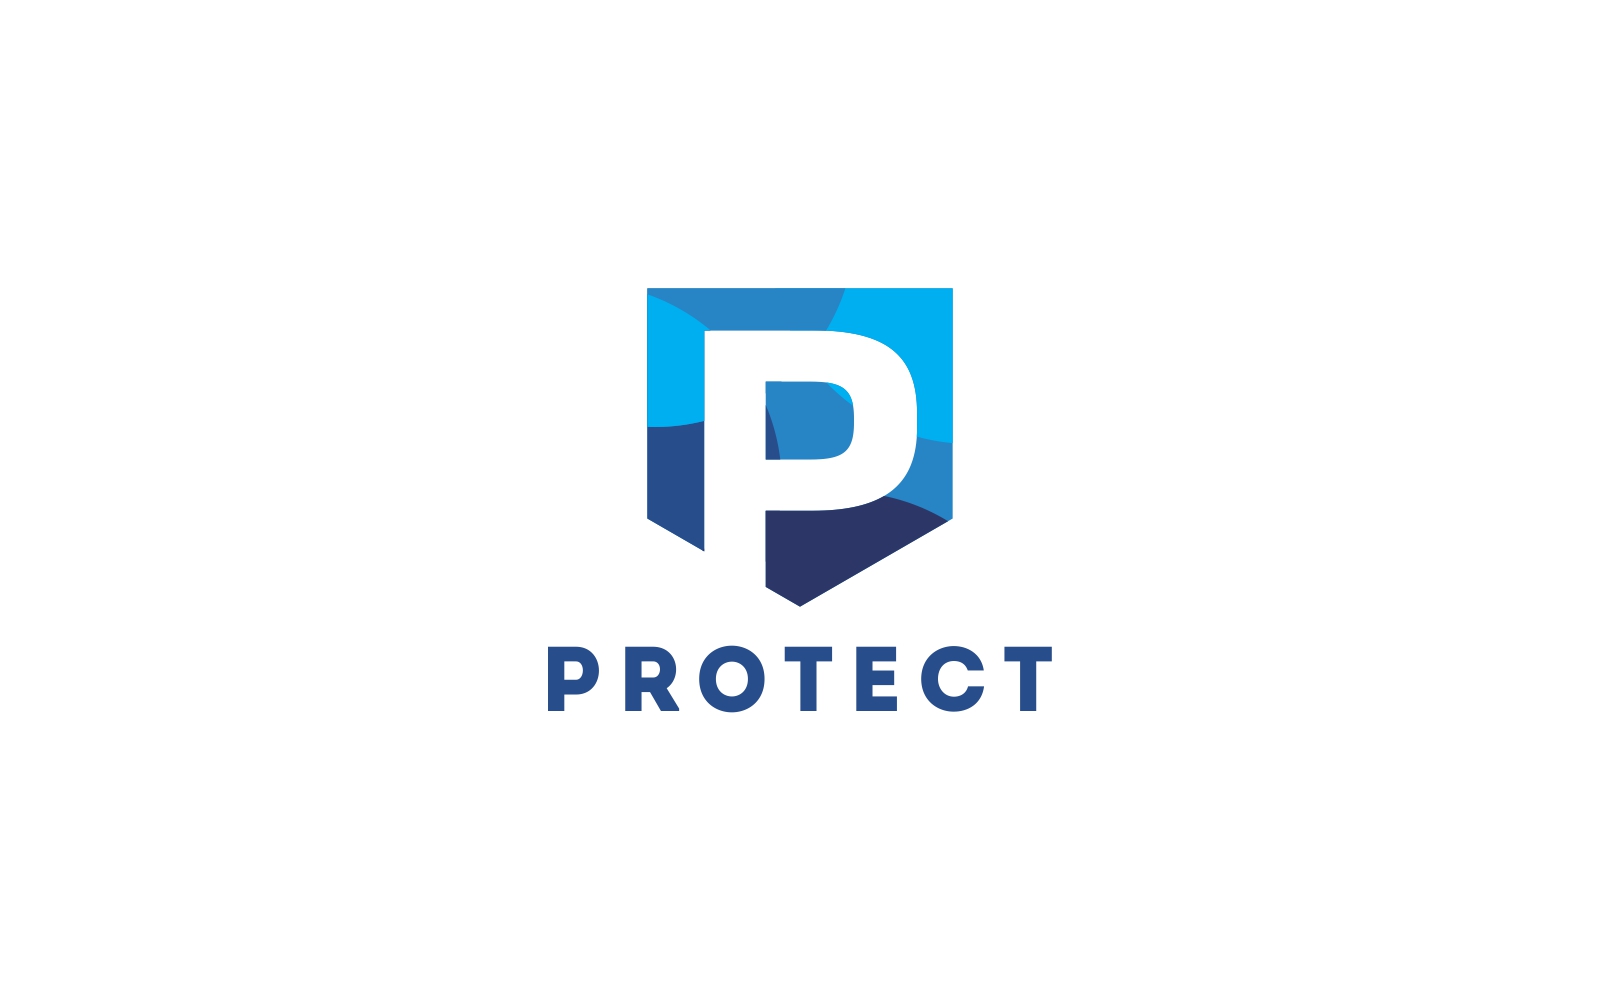 P Letter Shield Logo Template